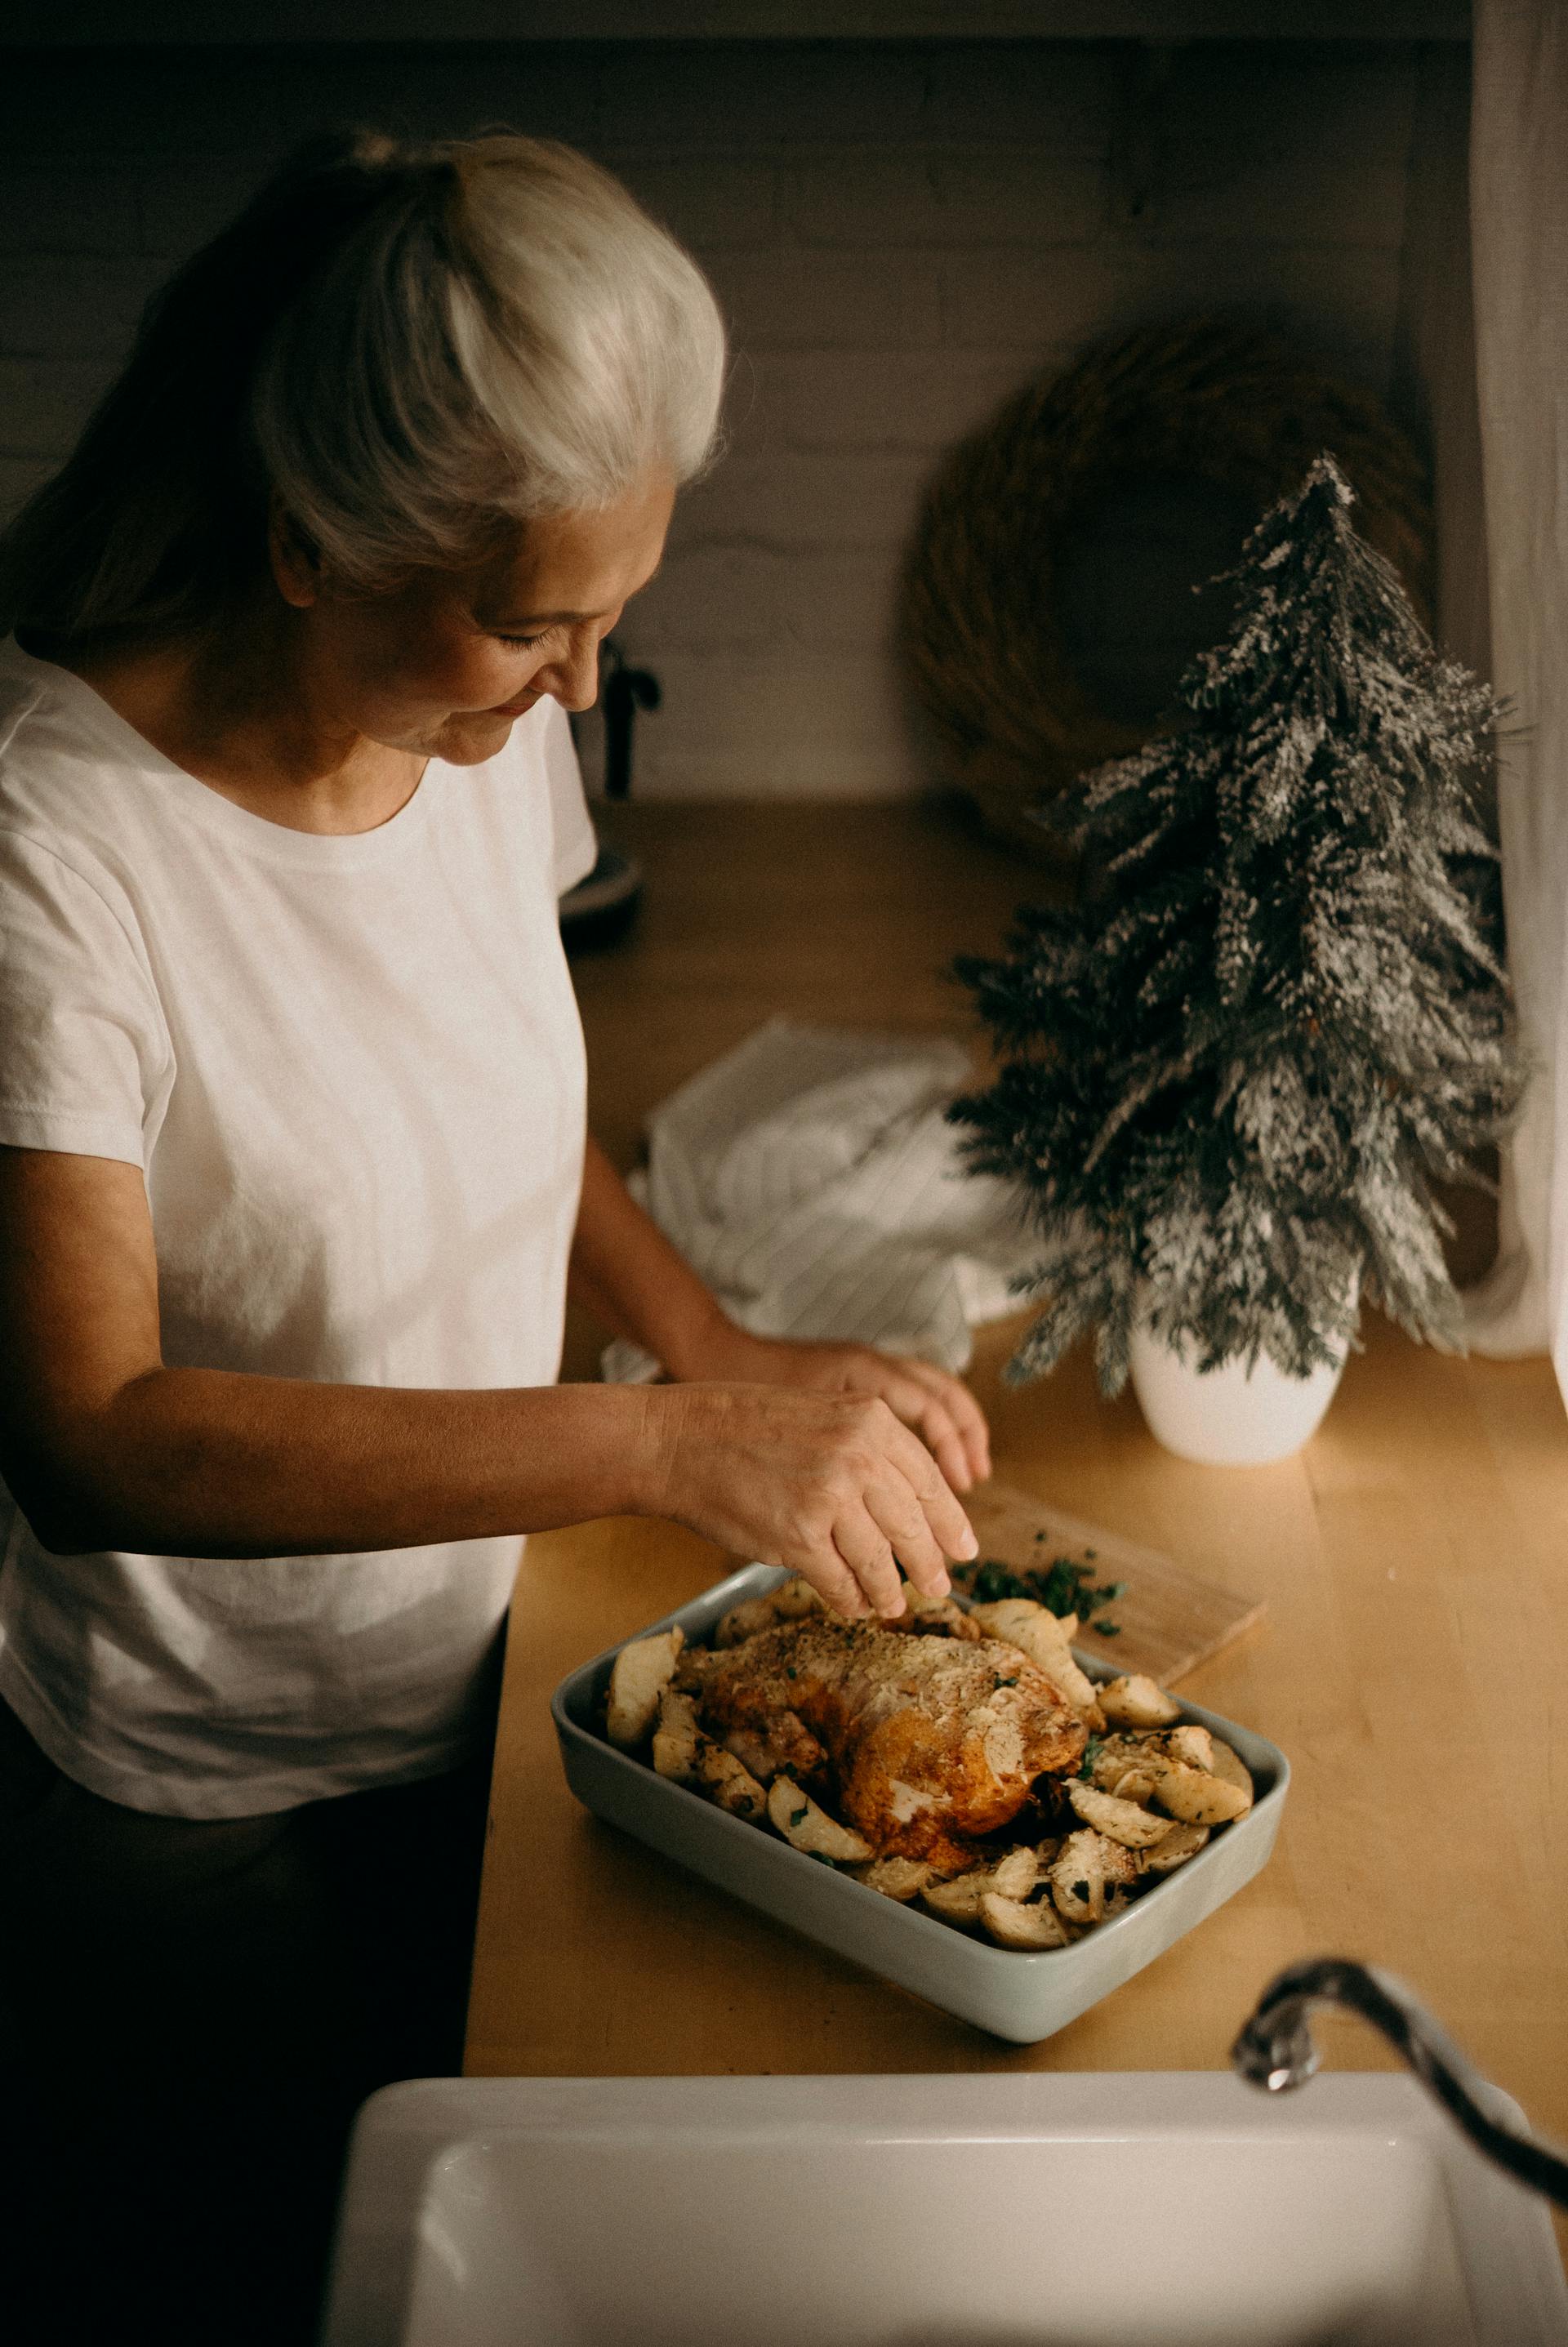 A senior woman preparing dinner | Source: Pexels